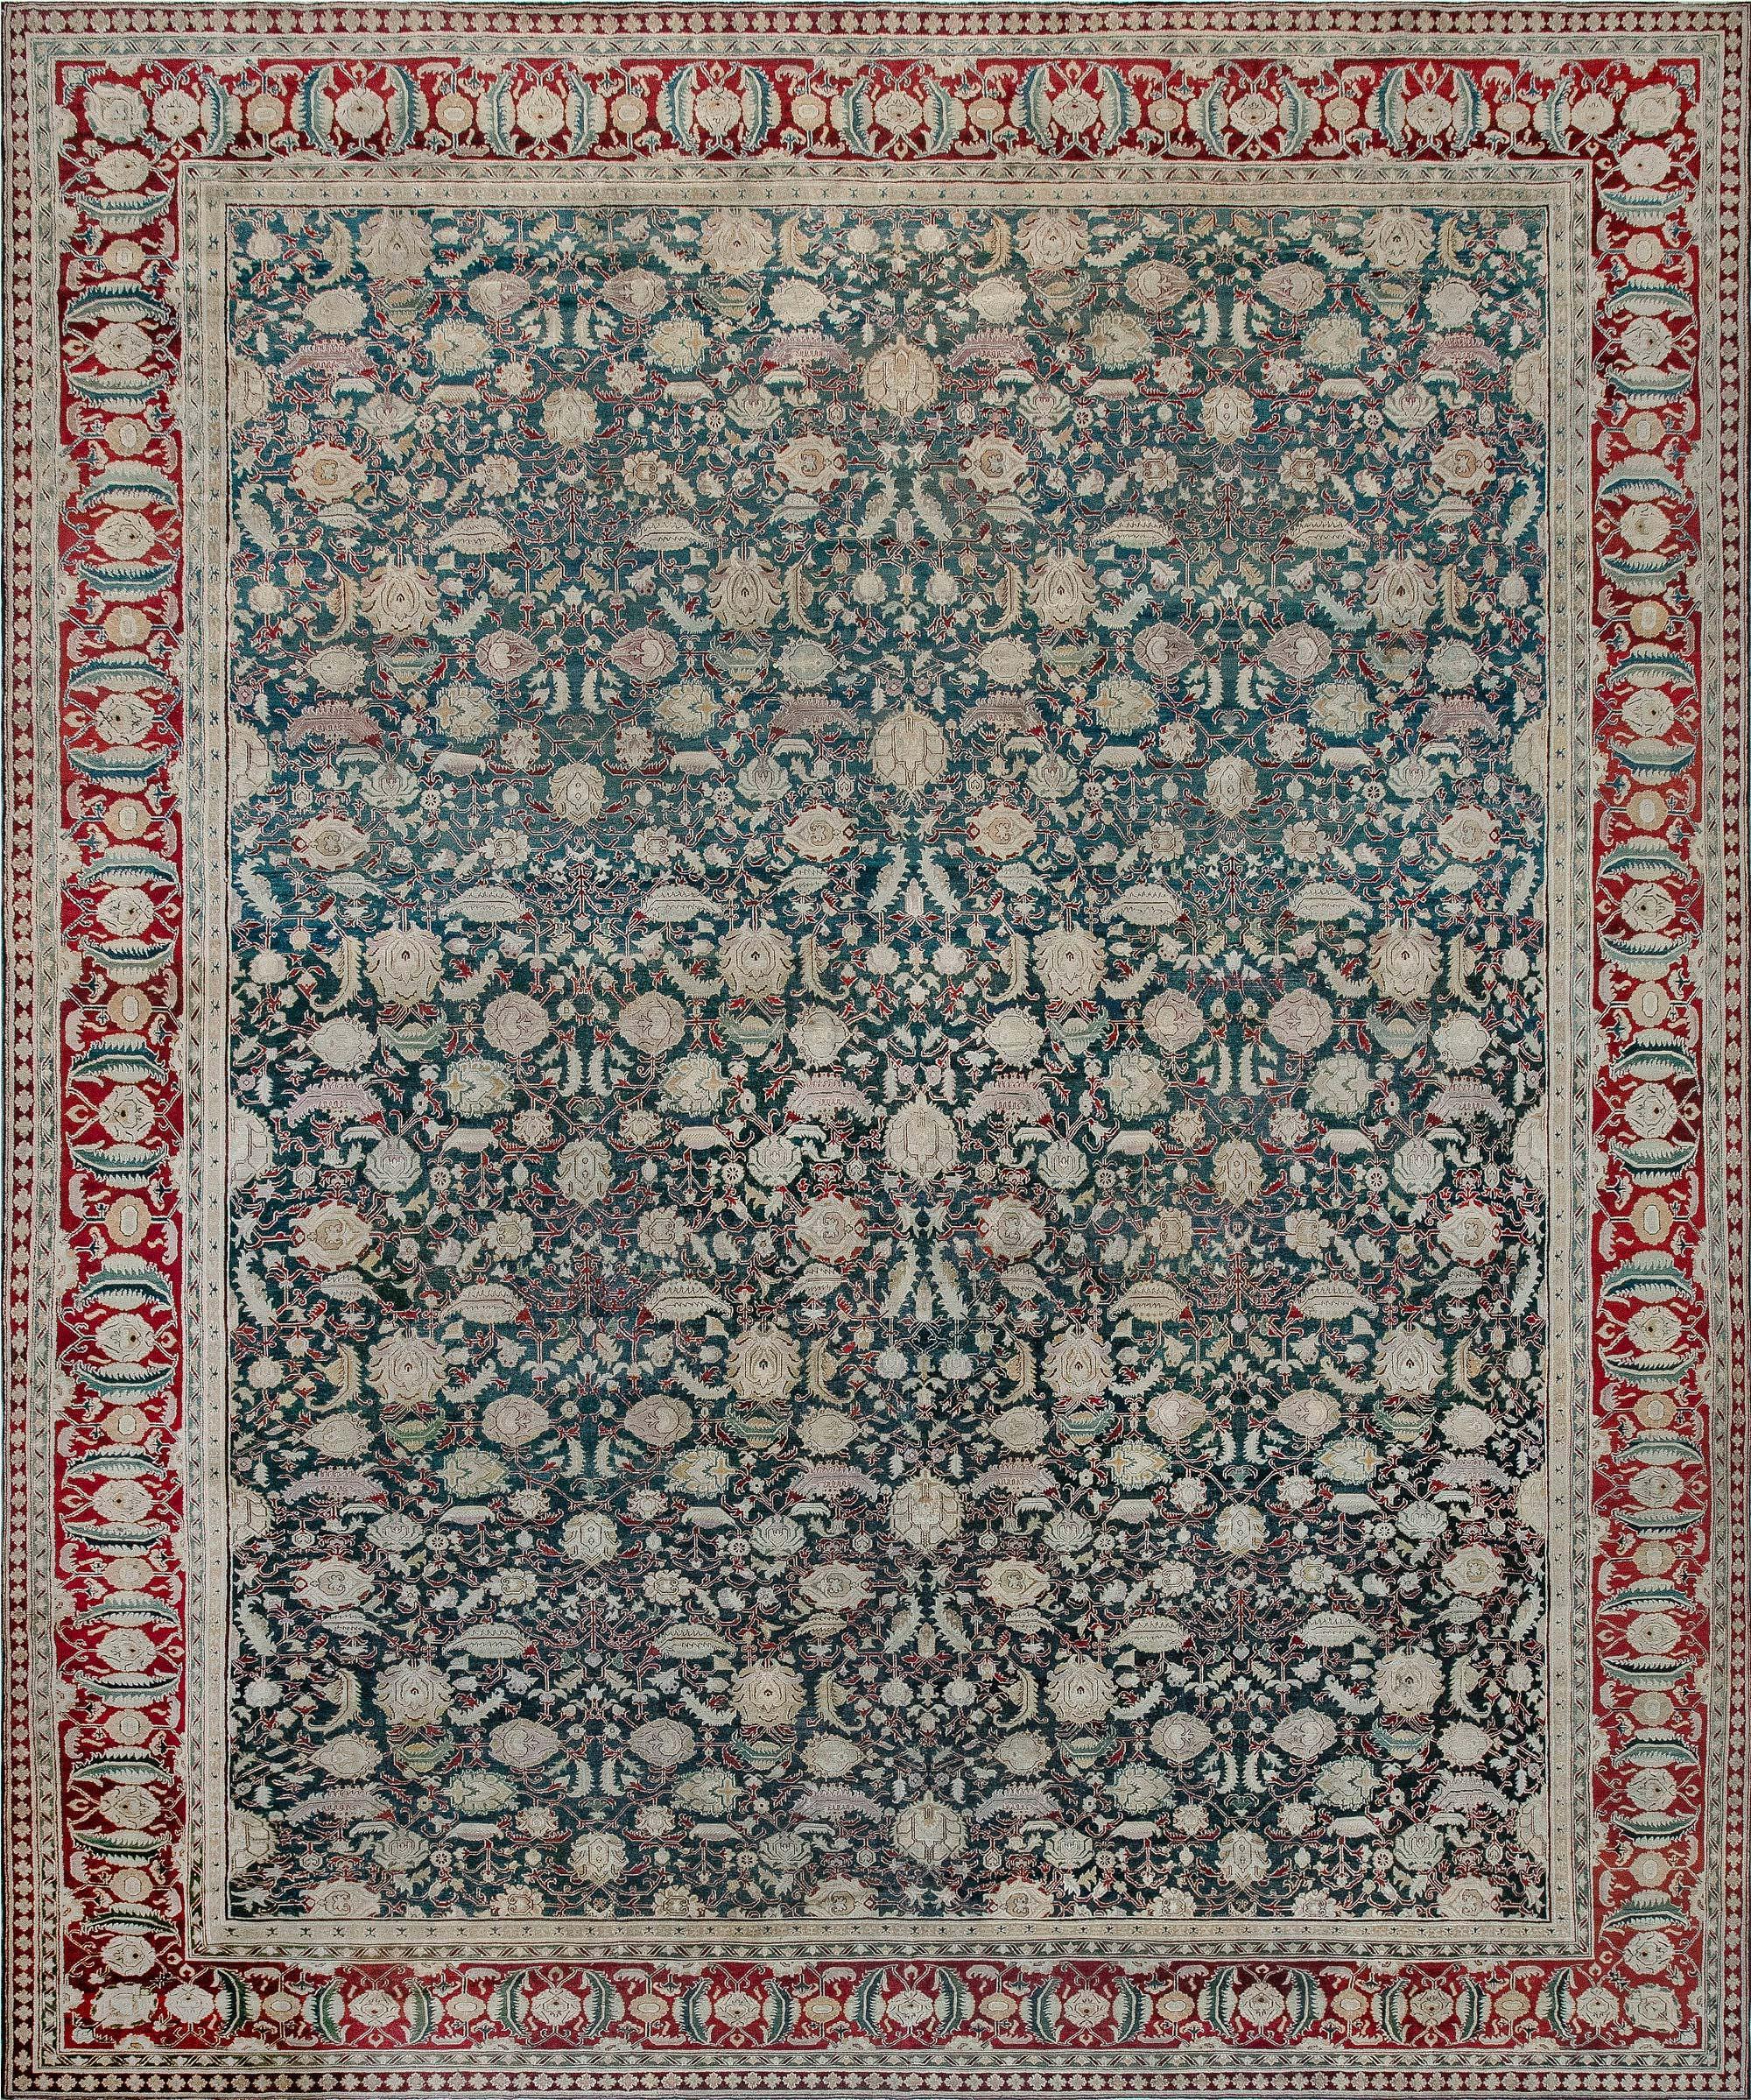 19th Century Indian Agra Floral Handmade Wool Rug